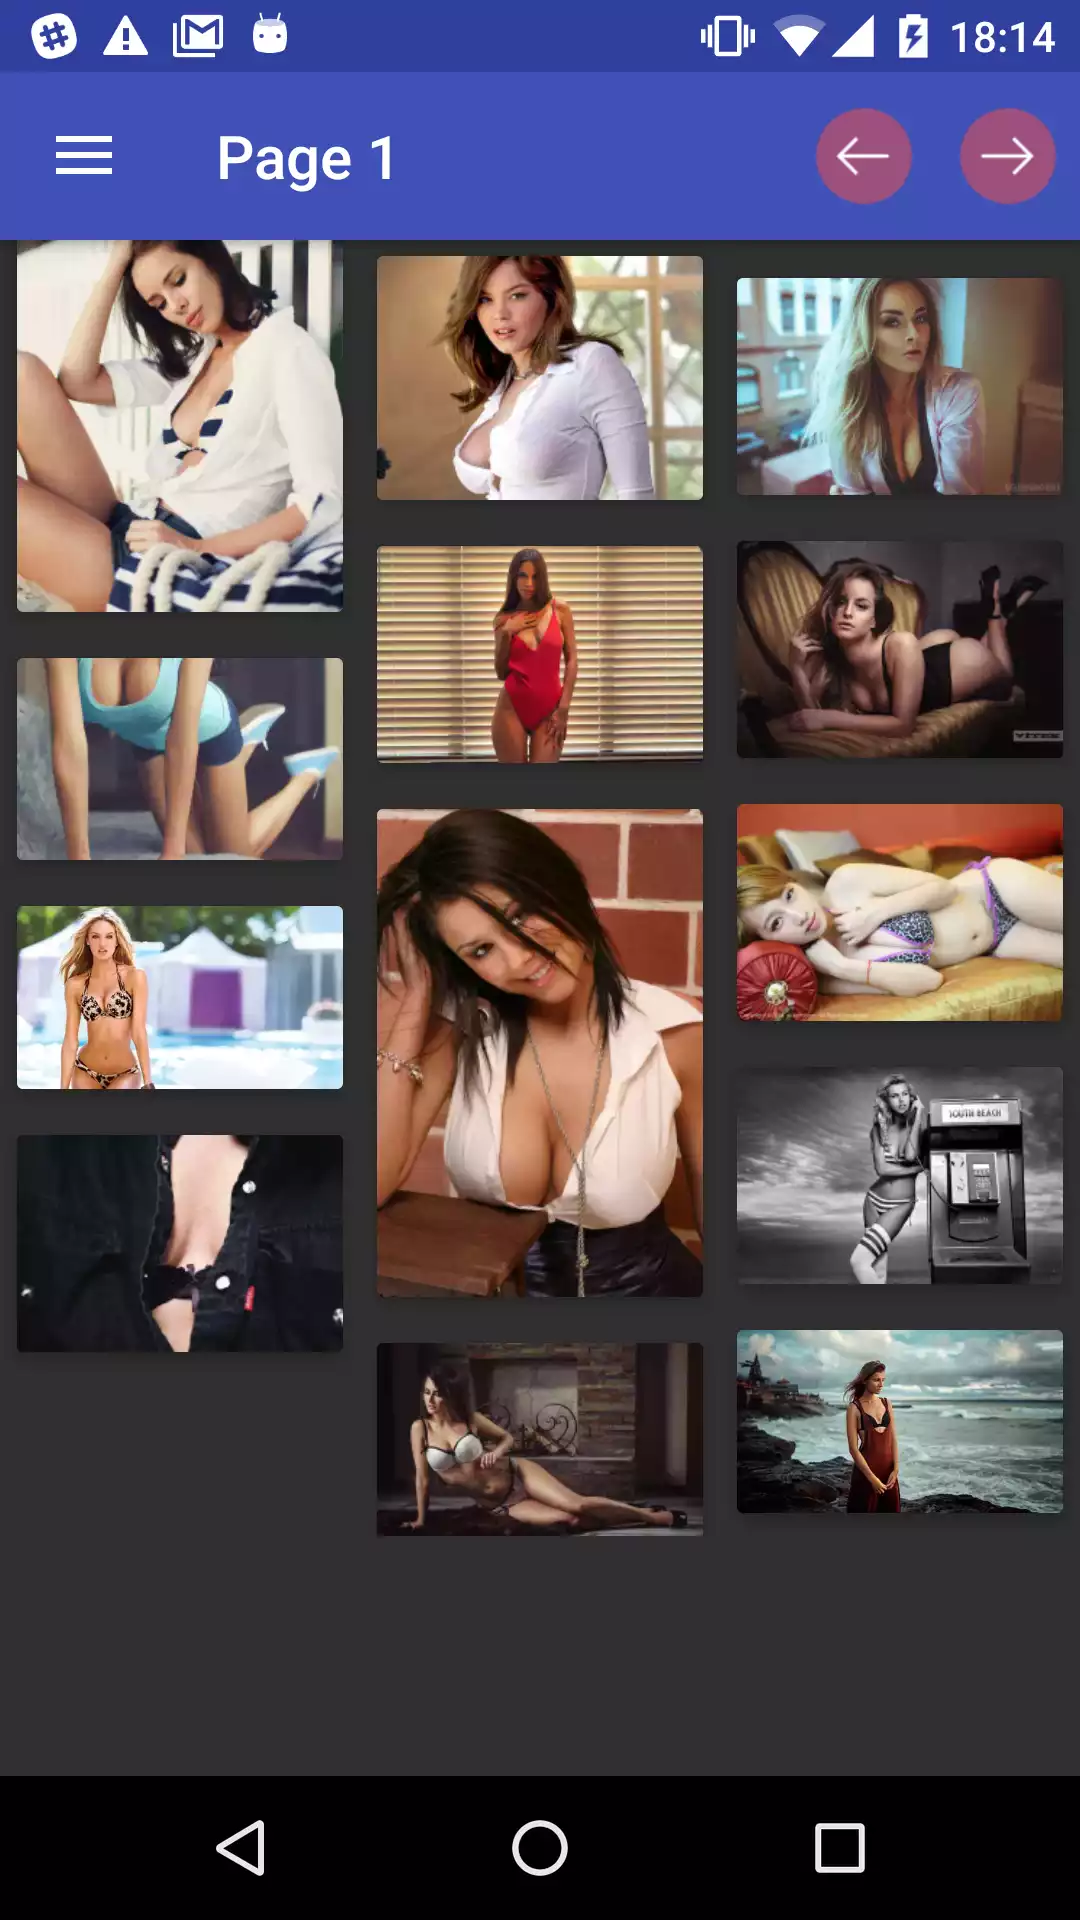 Cleavage Backgrounds sexy,hentsi,new,hentie,photos,porn,artwork,pics,hentai,hotebonypics,pic,apk,ebony,pocs,pictures,series,futanari,download,app,backgrounds,hentia,wallpapers,best